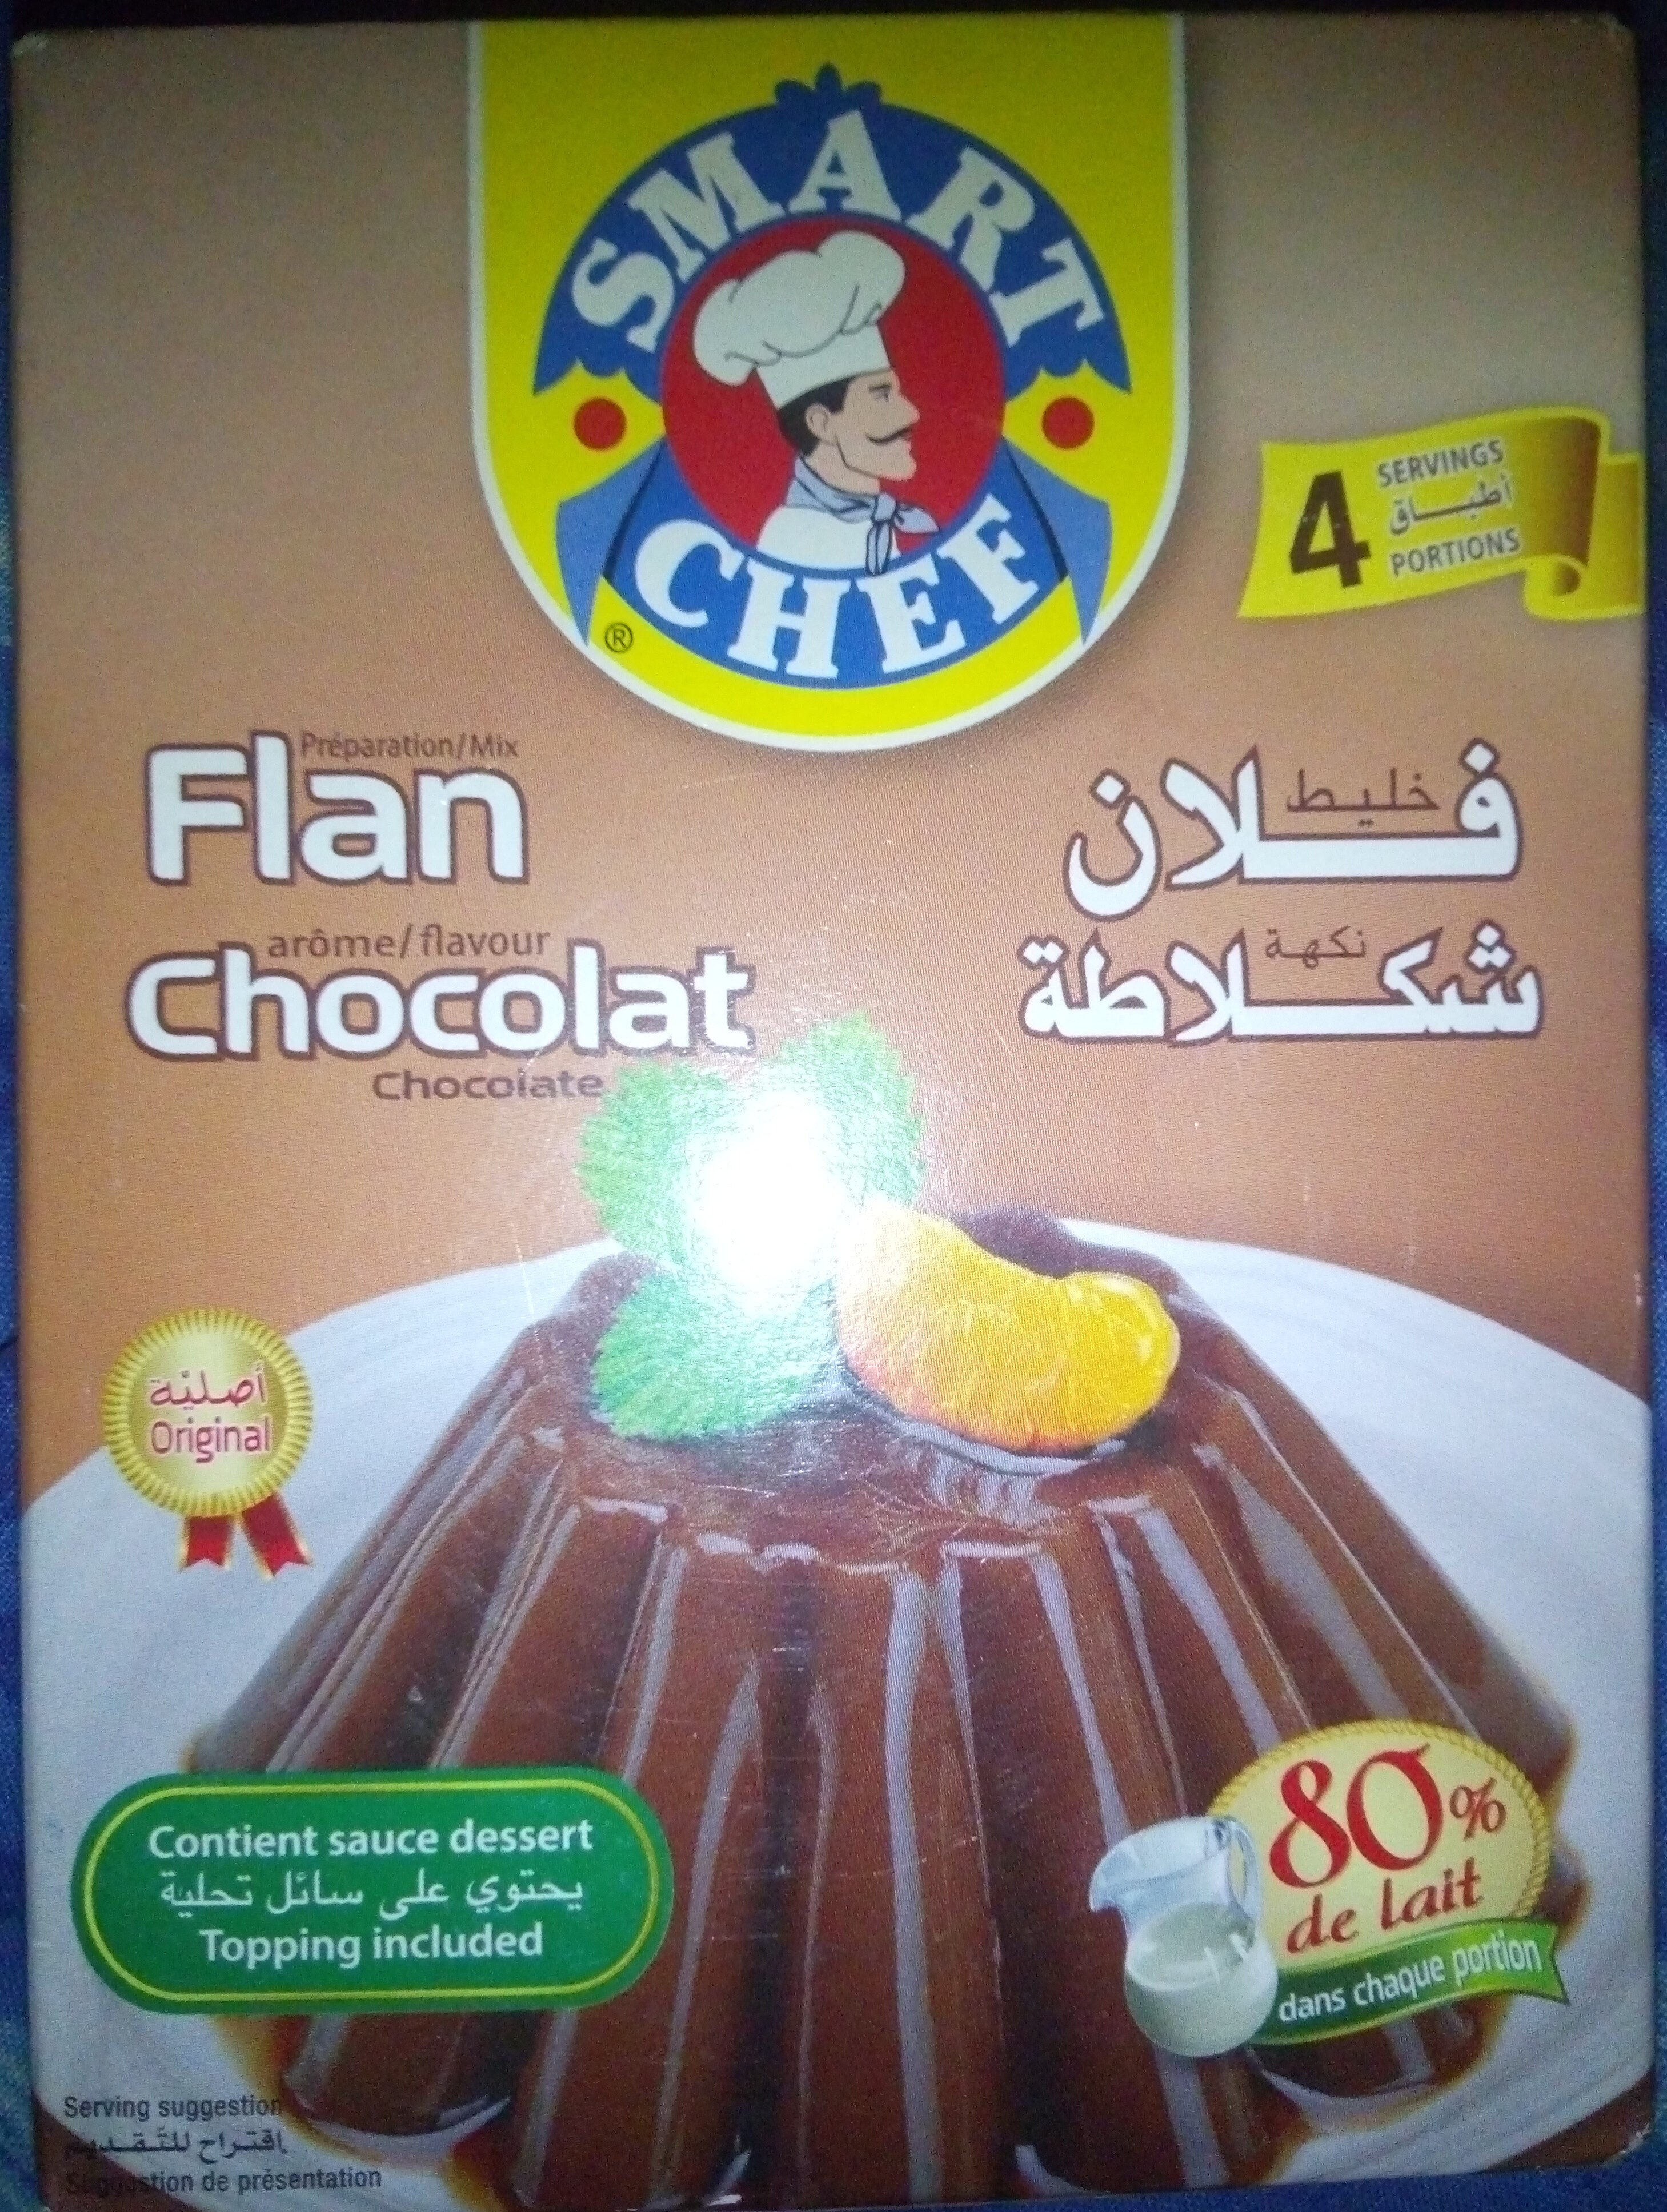 préparation flan arôme chocolat - Product